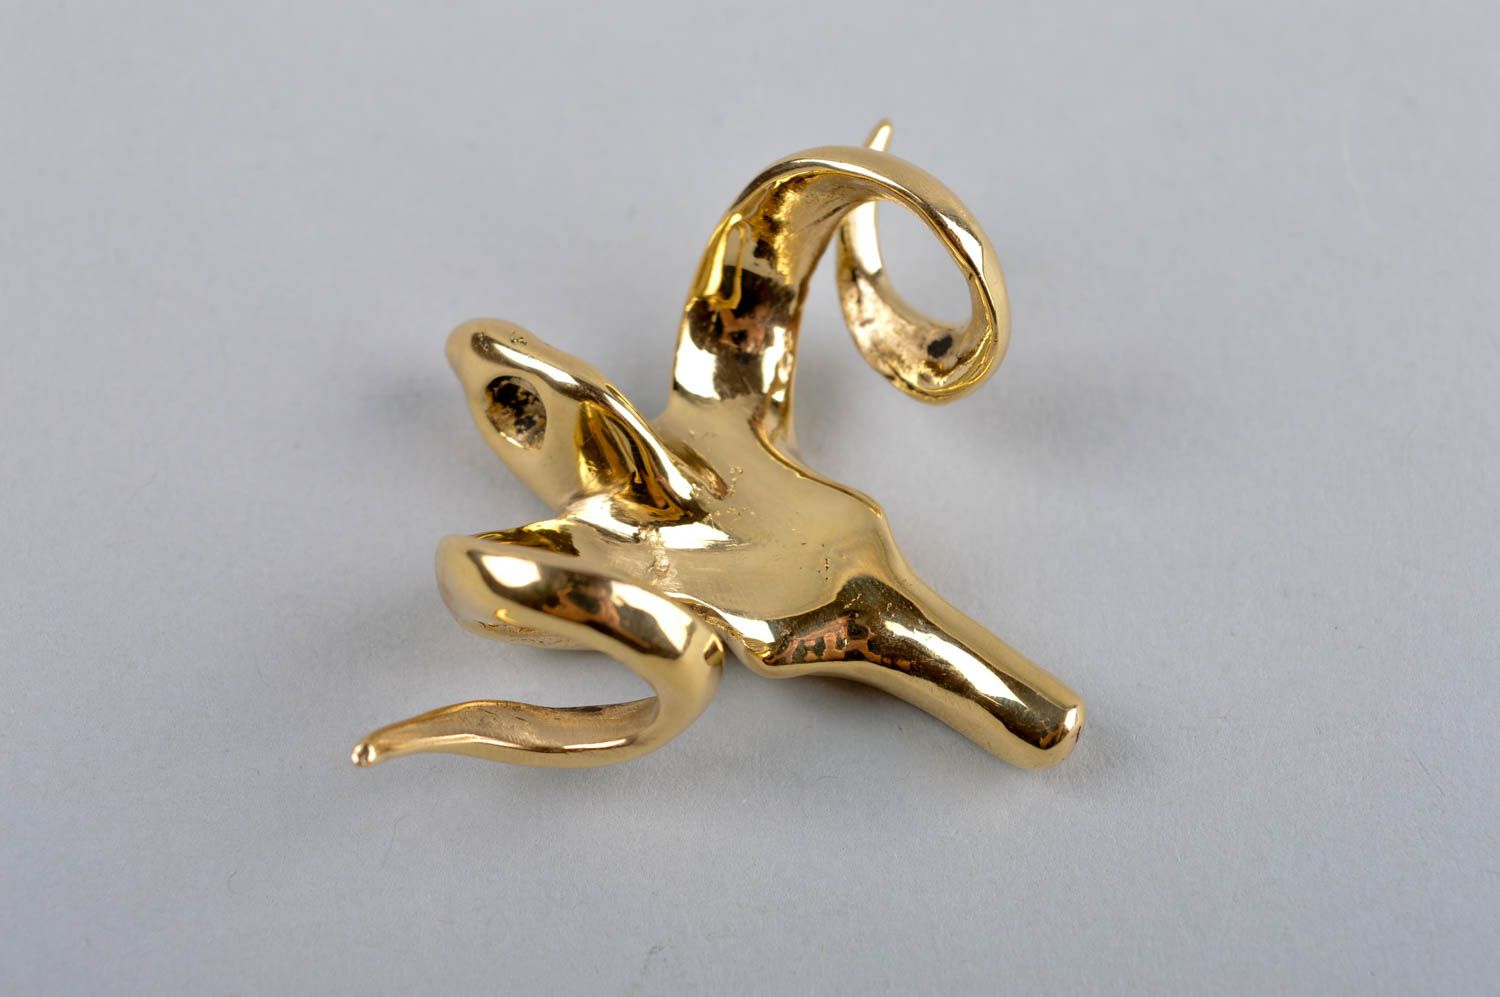 Handmade metal pendant unusual brass pendant stylish designer accessory photo 4